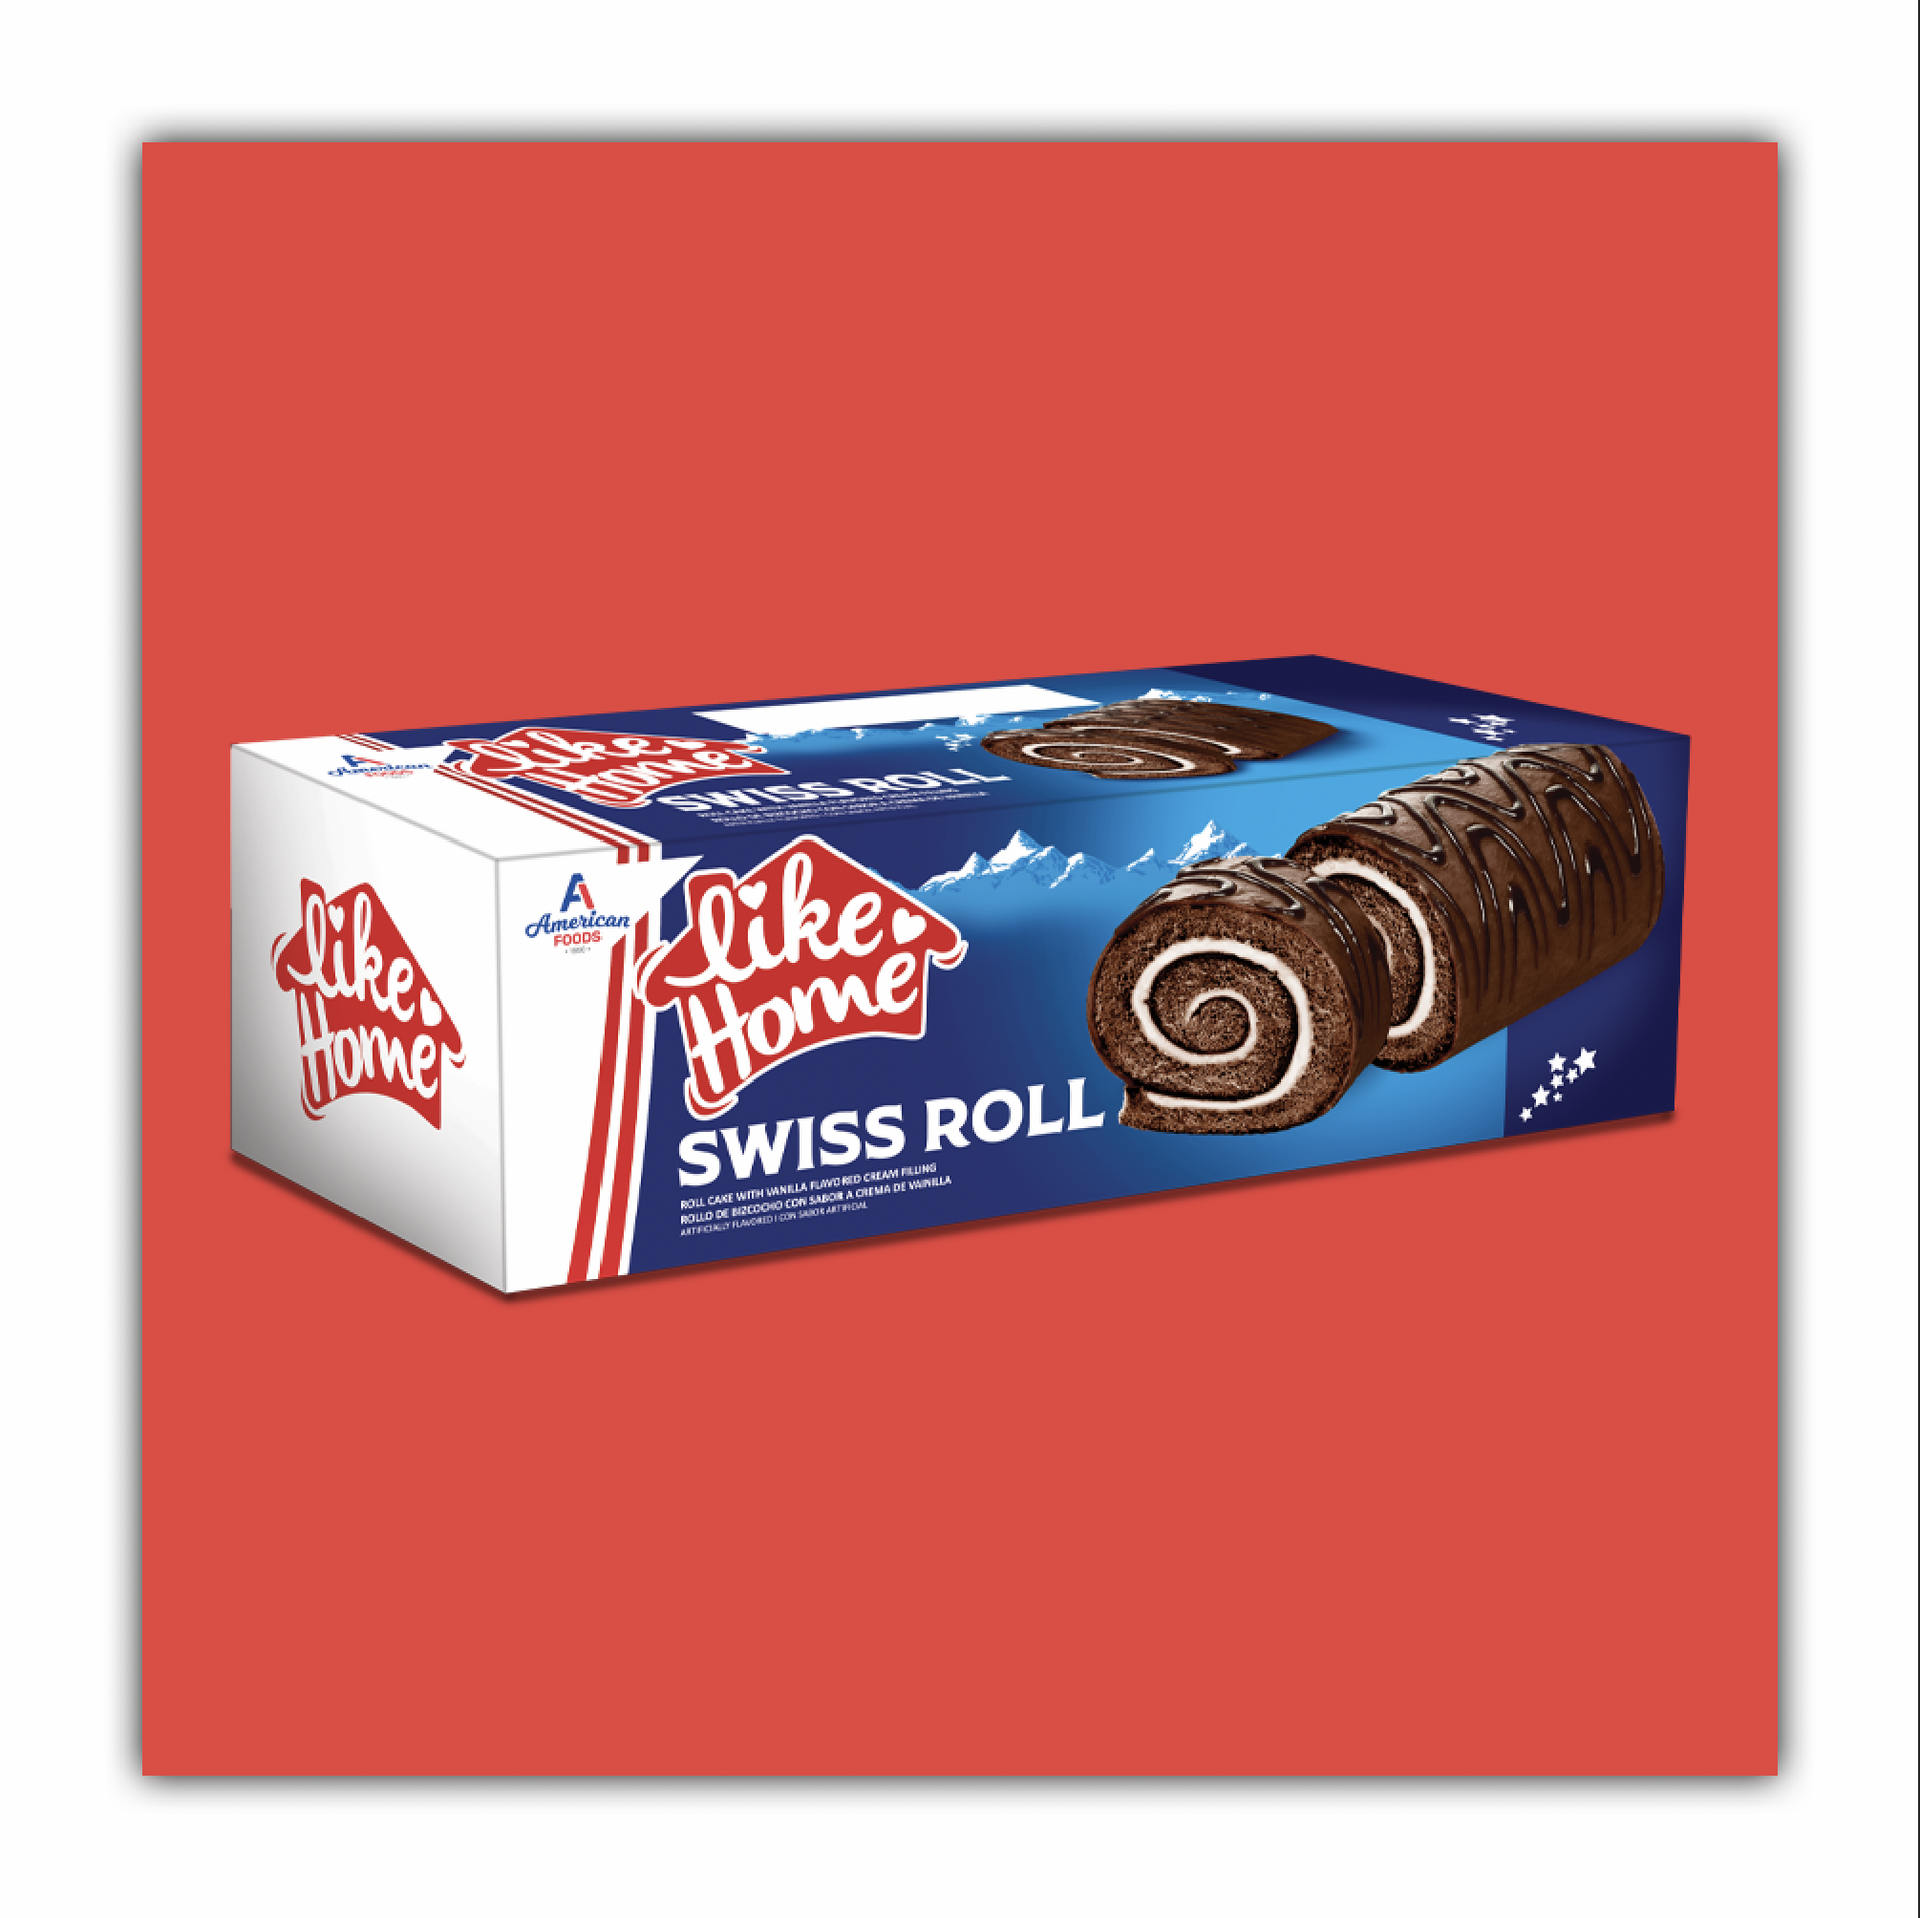 Like-Home-Swiss-Roll-Chocolate